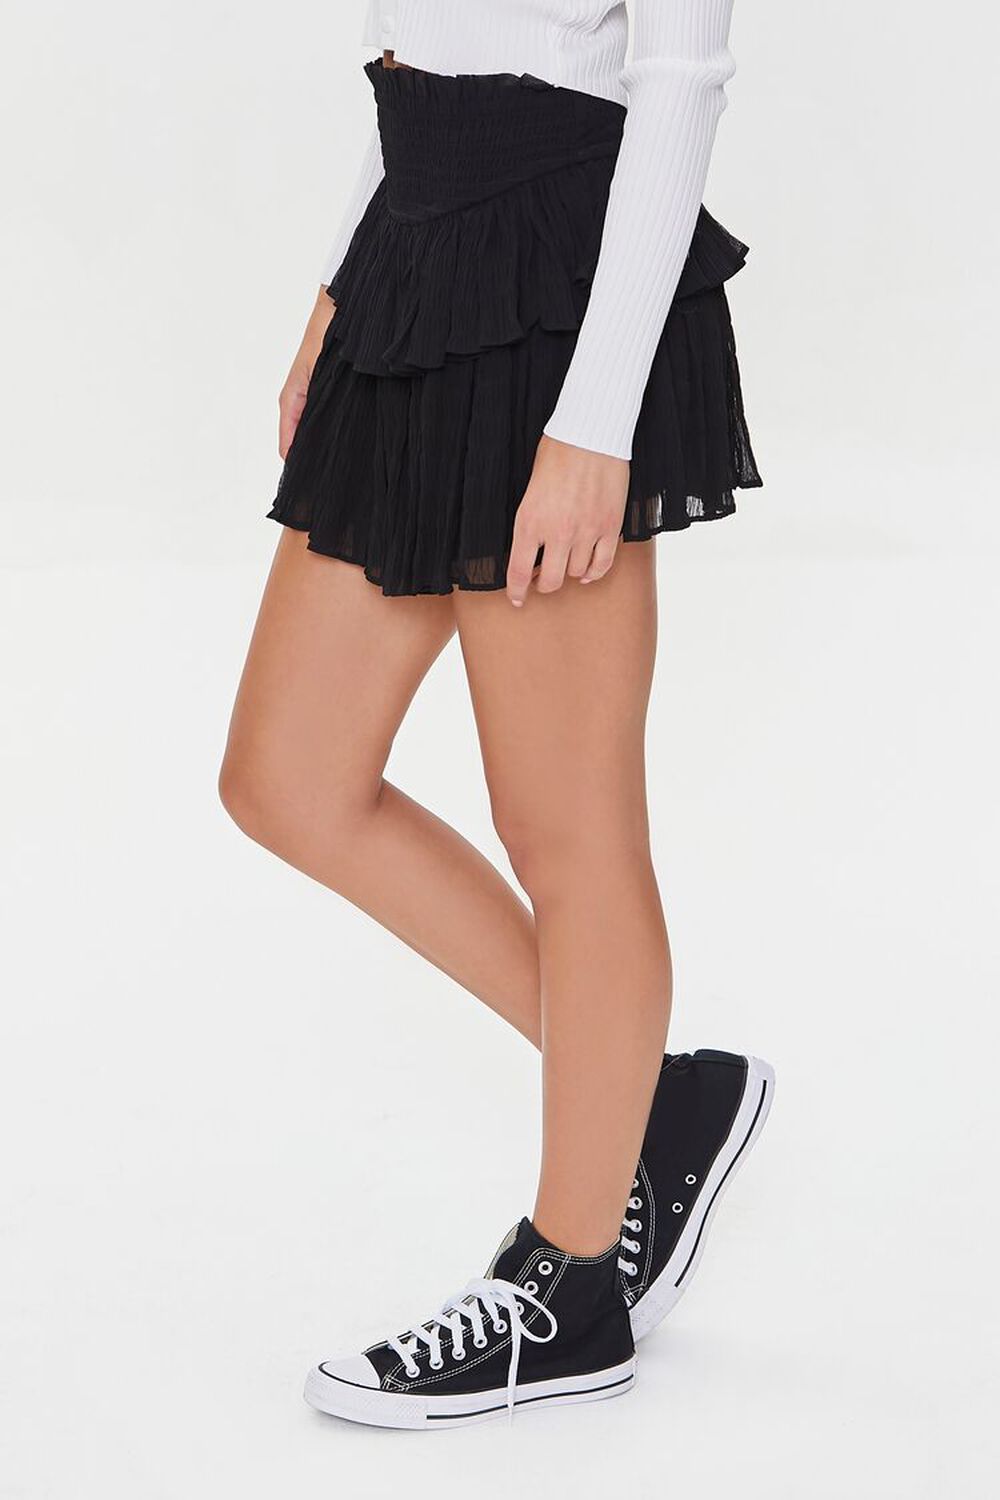 BLACK Tiered Ruffle Mini Skirt, image 3